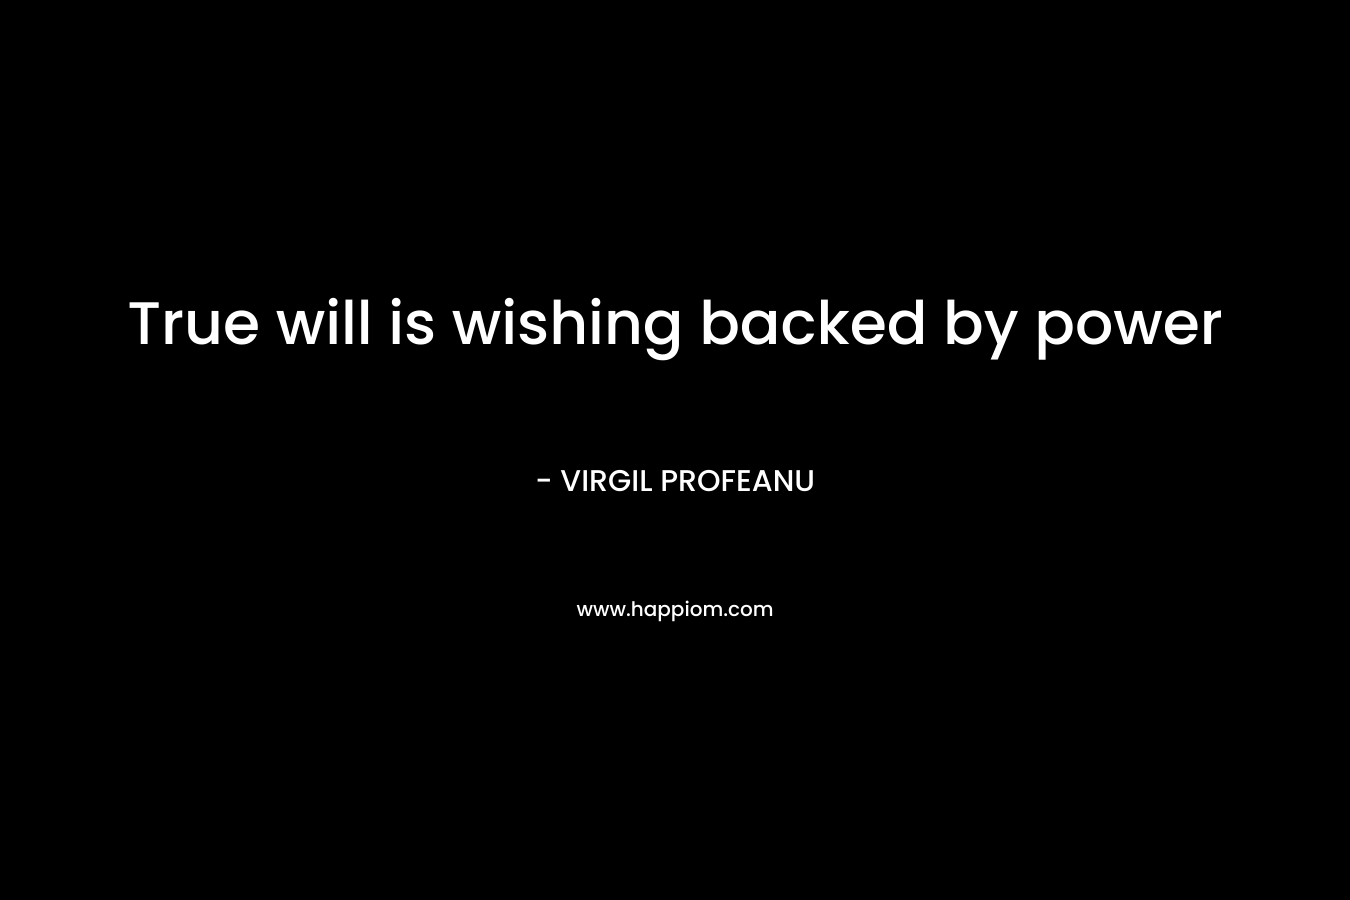 True will is wishing backed by power